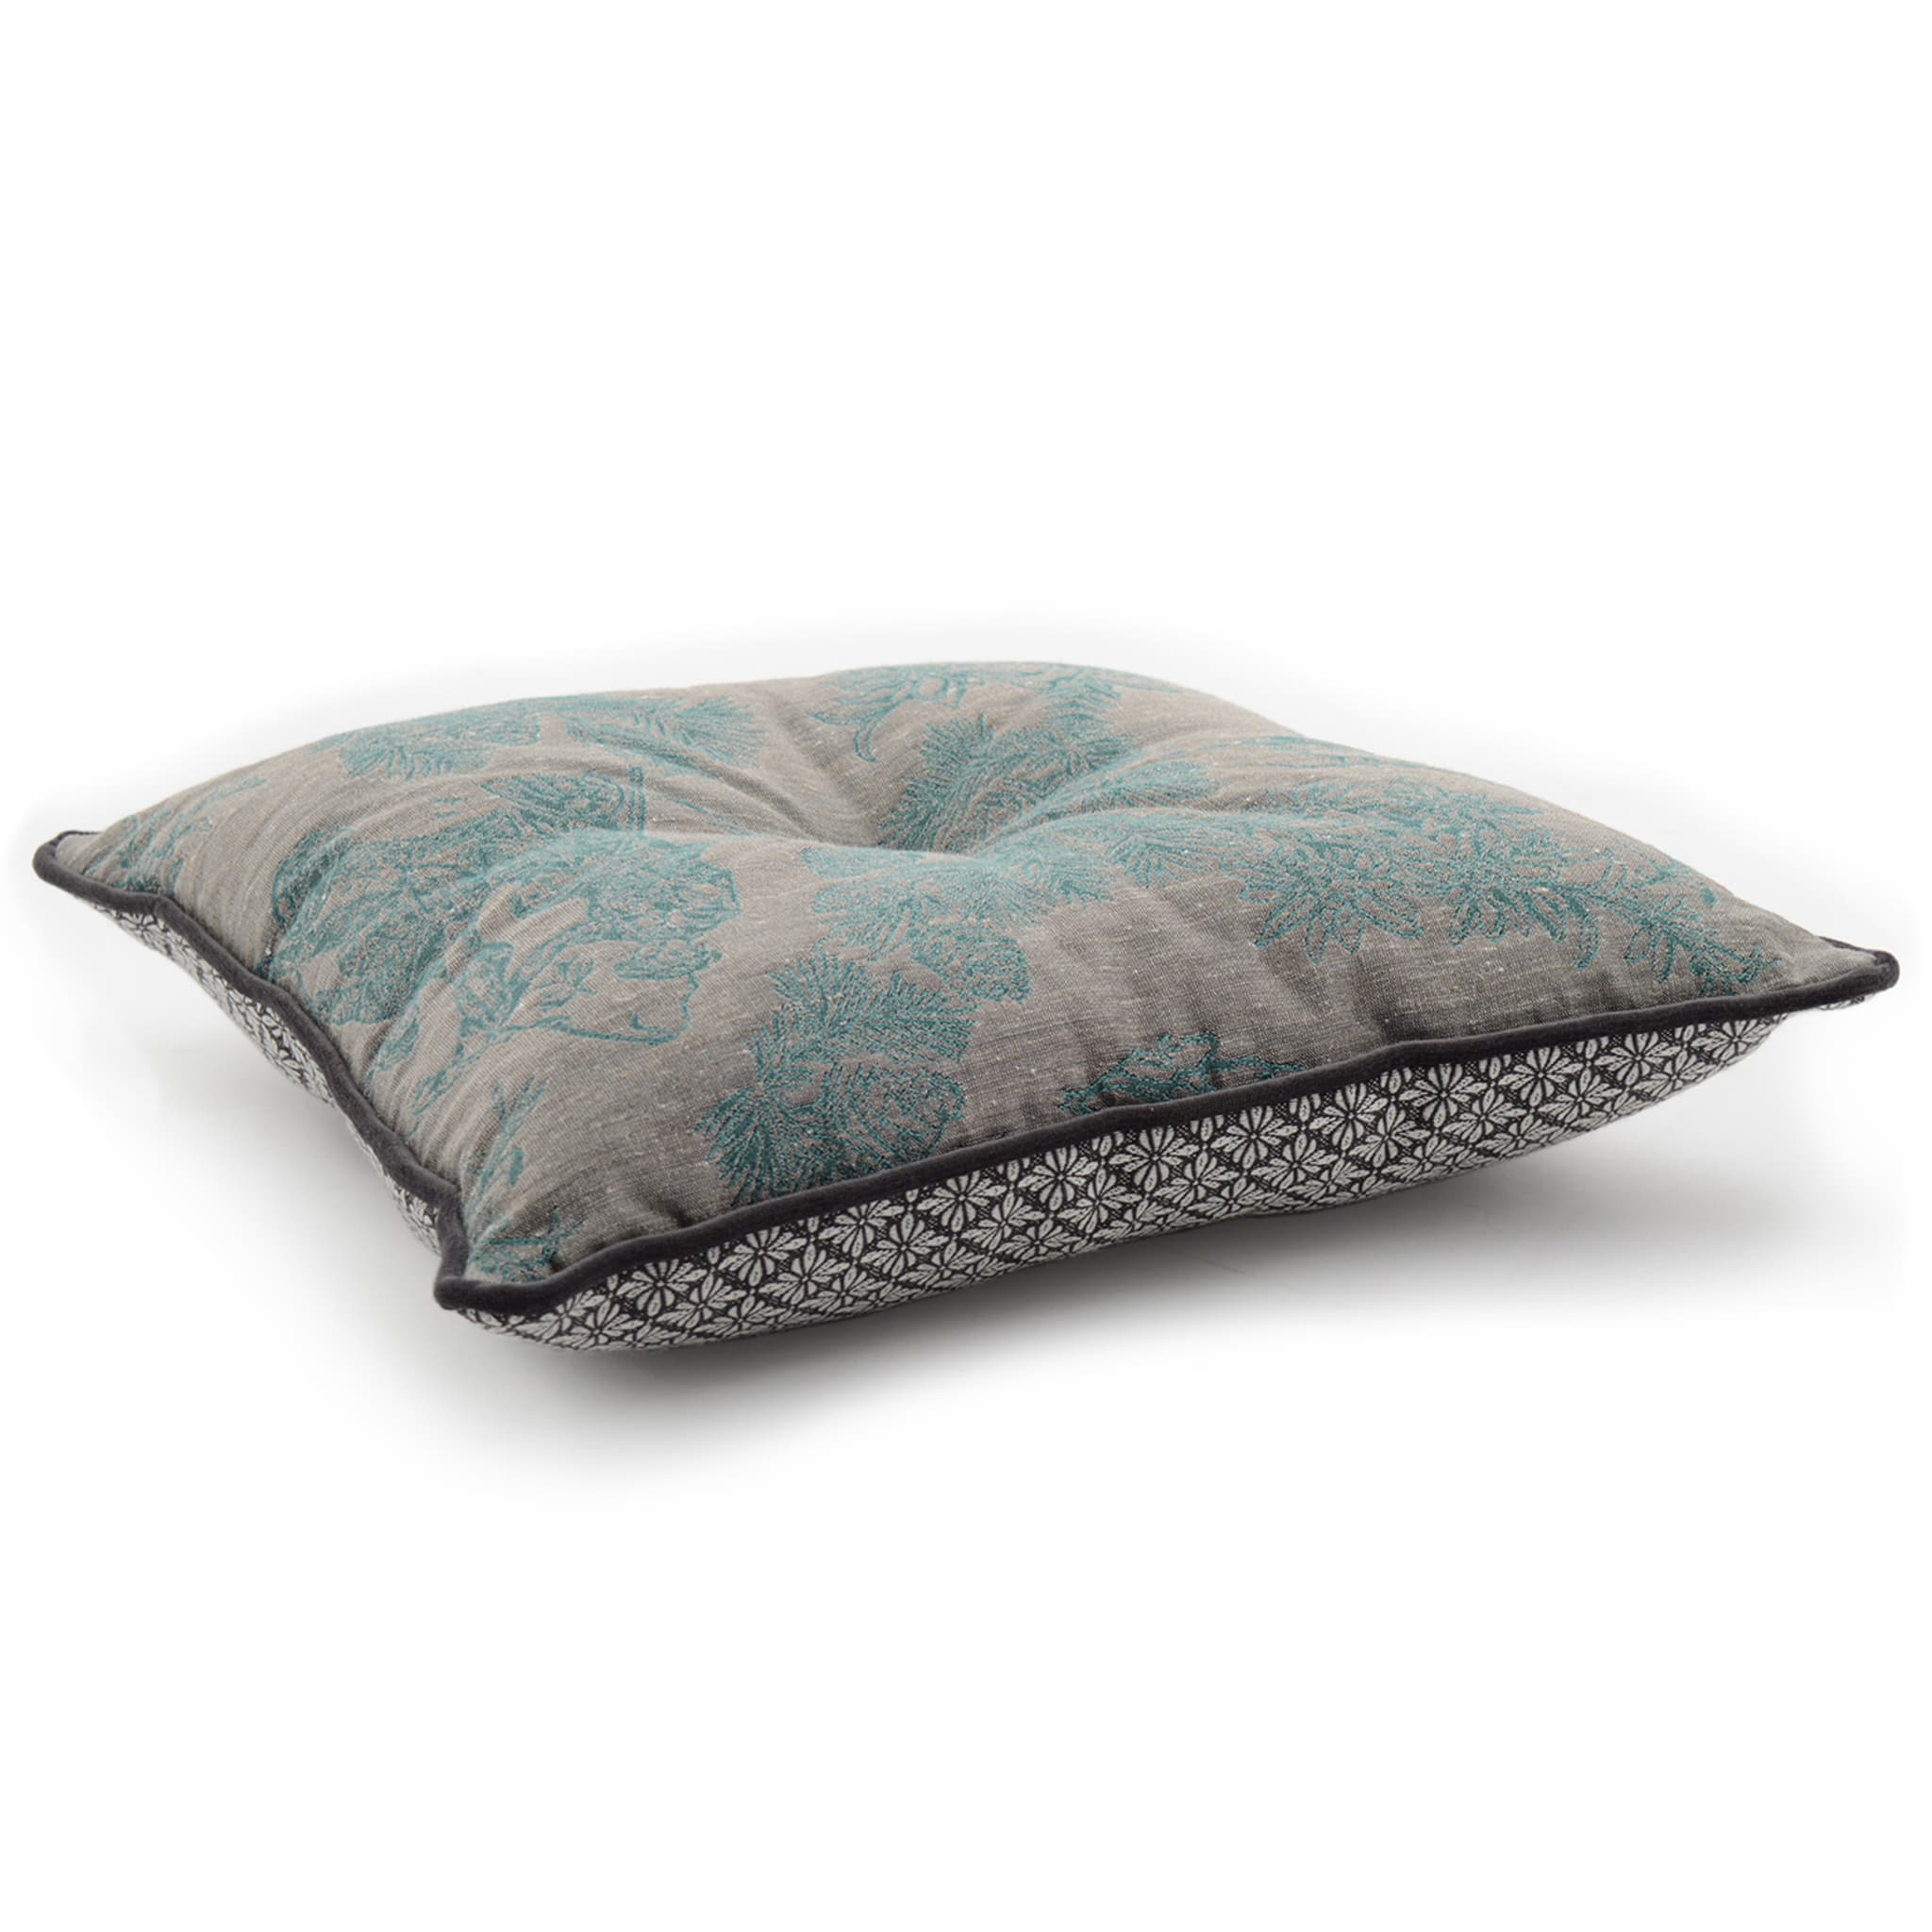 Carré Cushion in alpine jacquard fabric - Alternative view 1